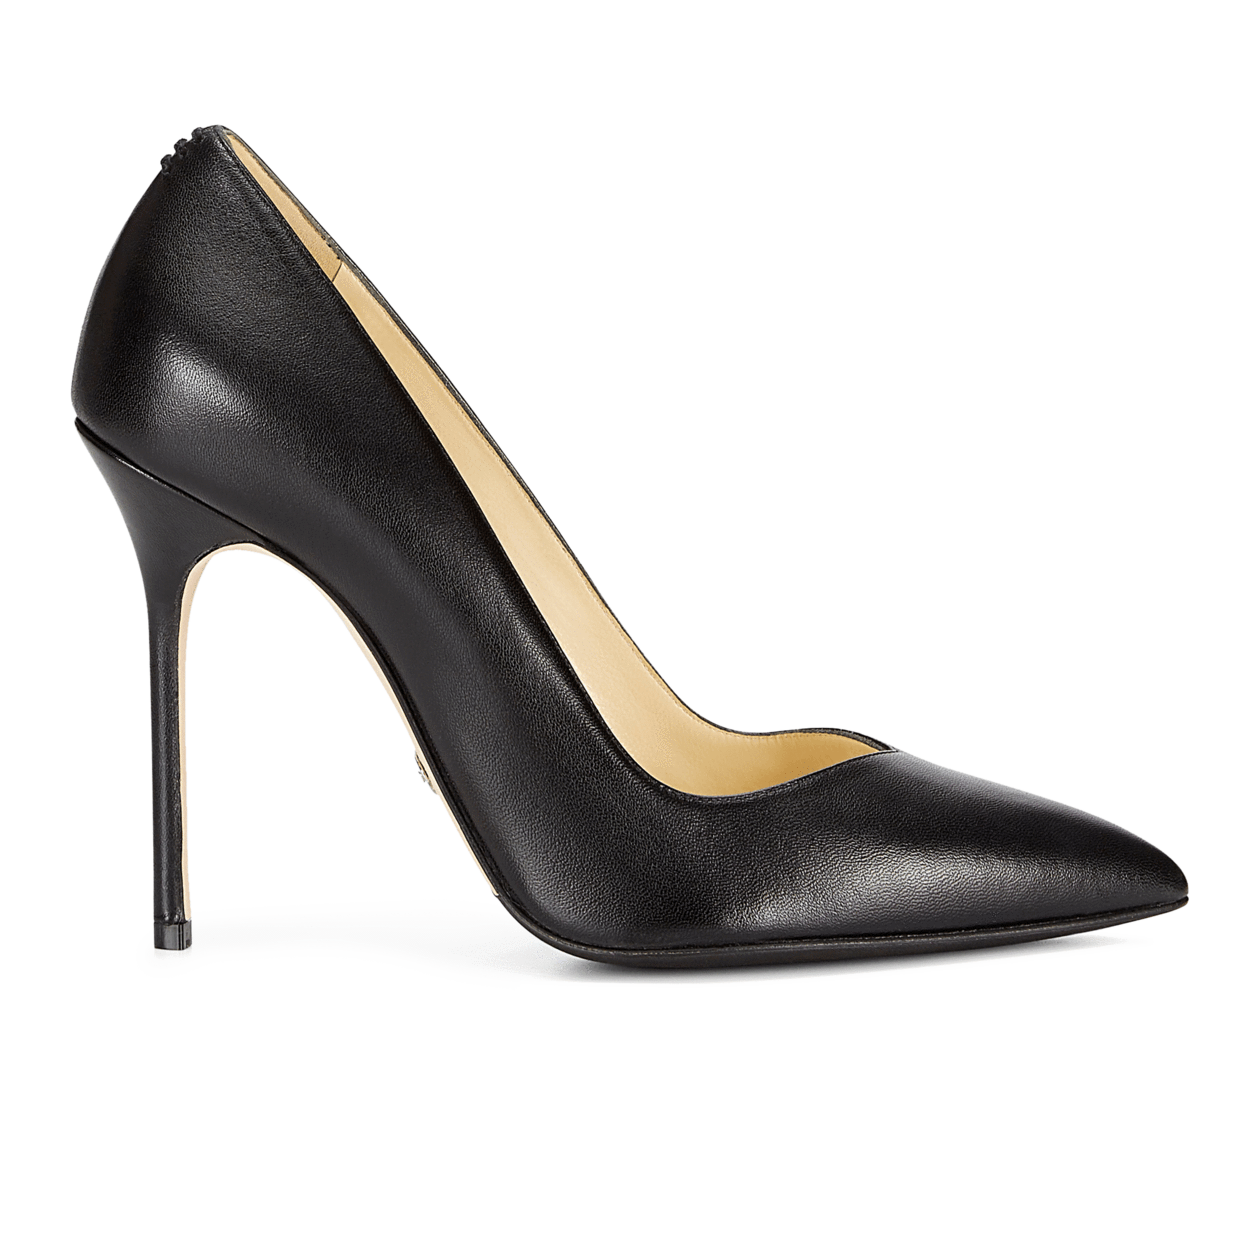 comfortable high heels brand